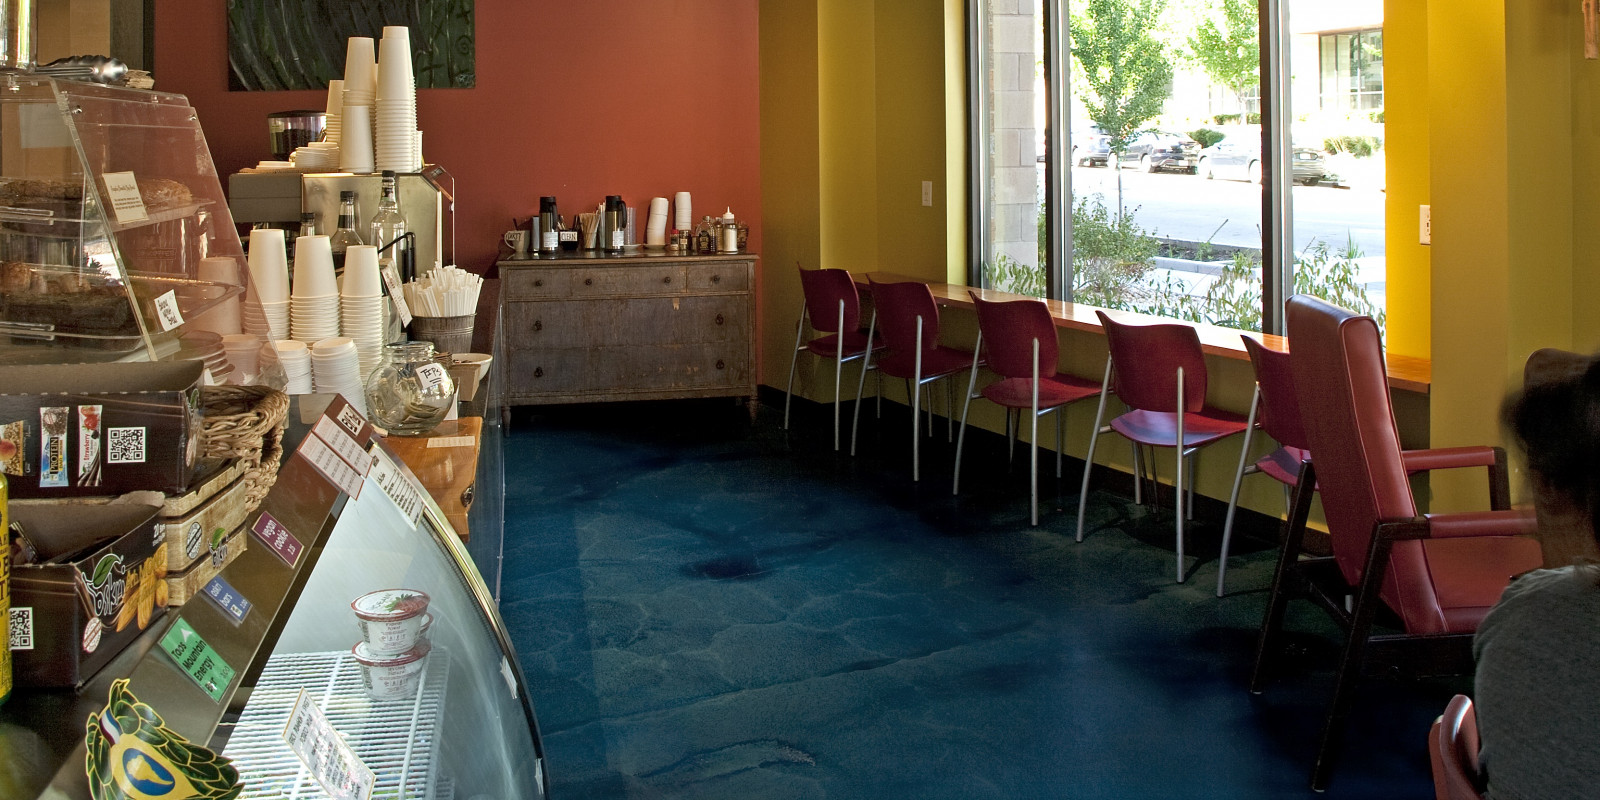 EVP Coffee Shop interior, Madison, WI